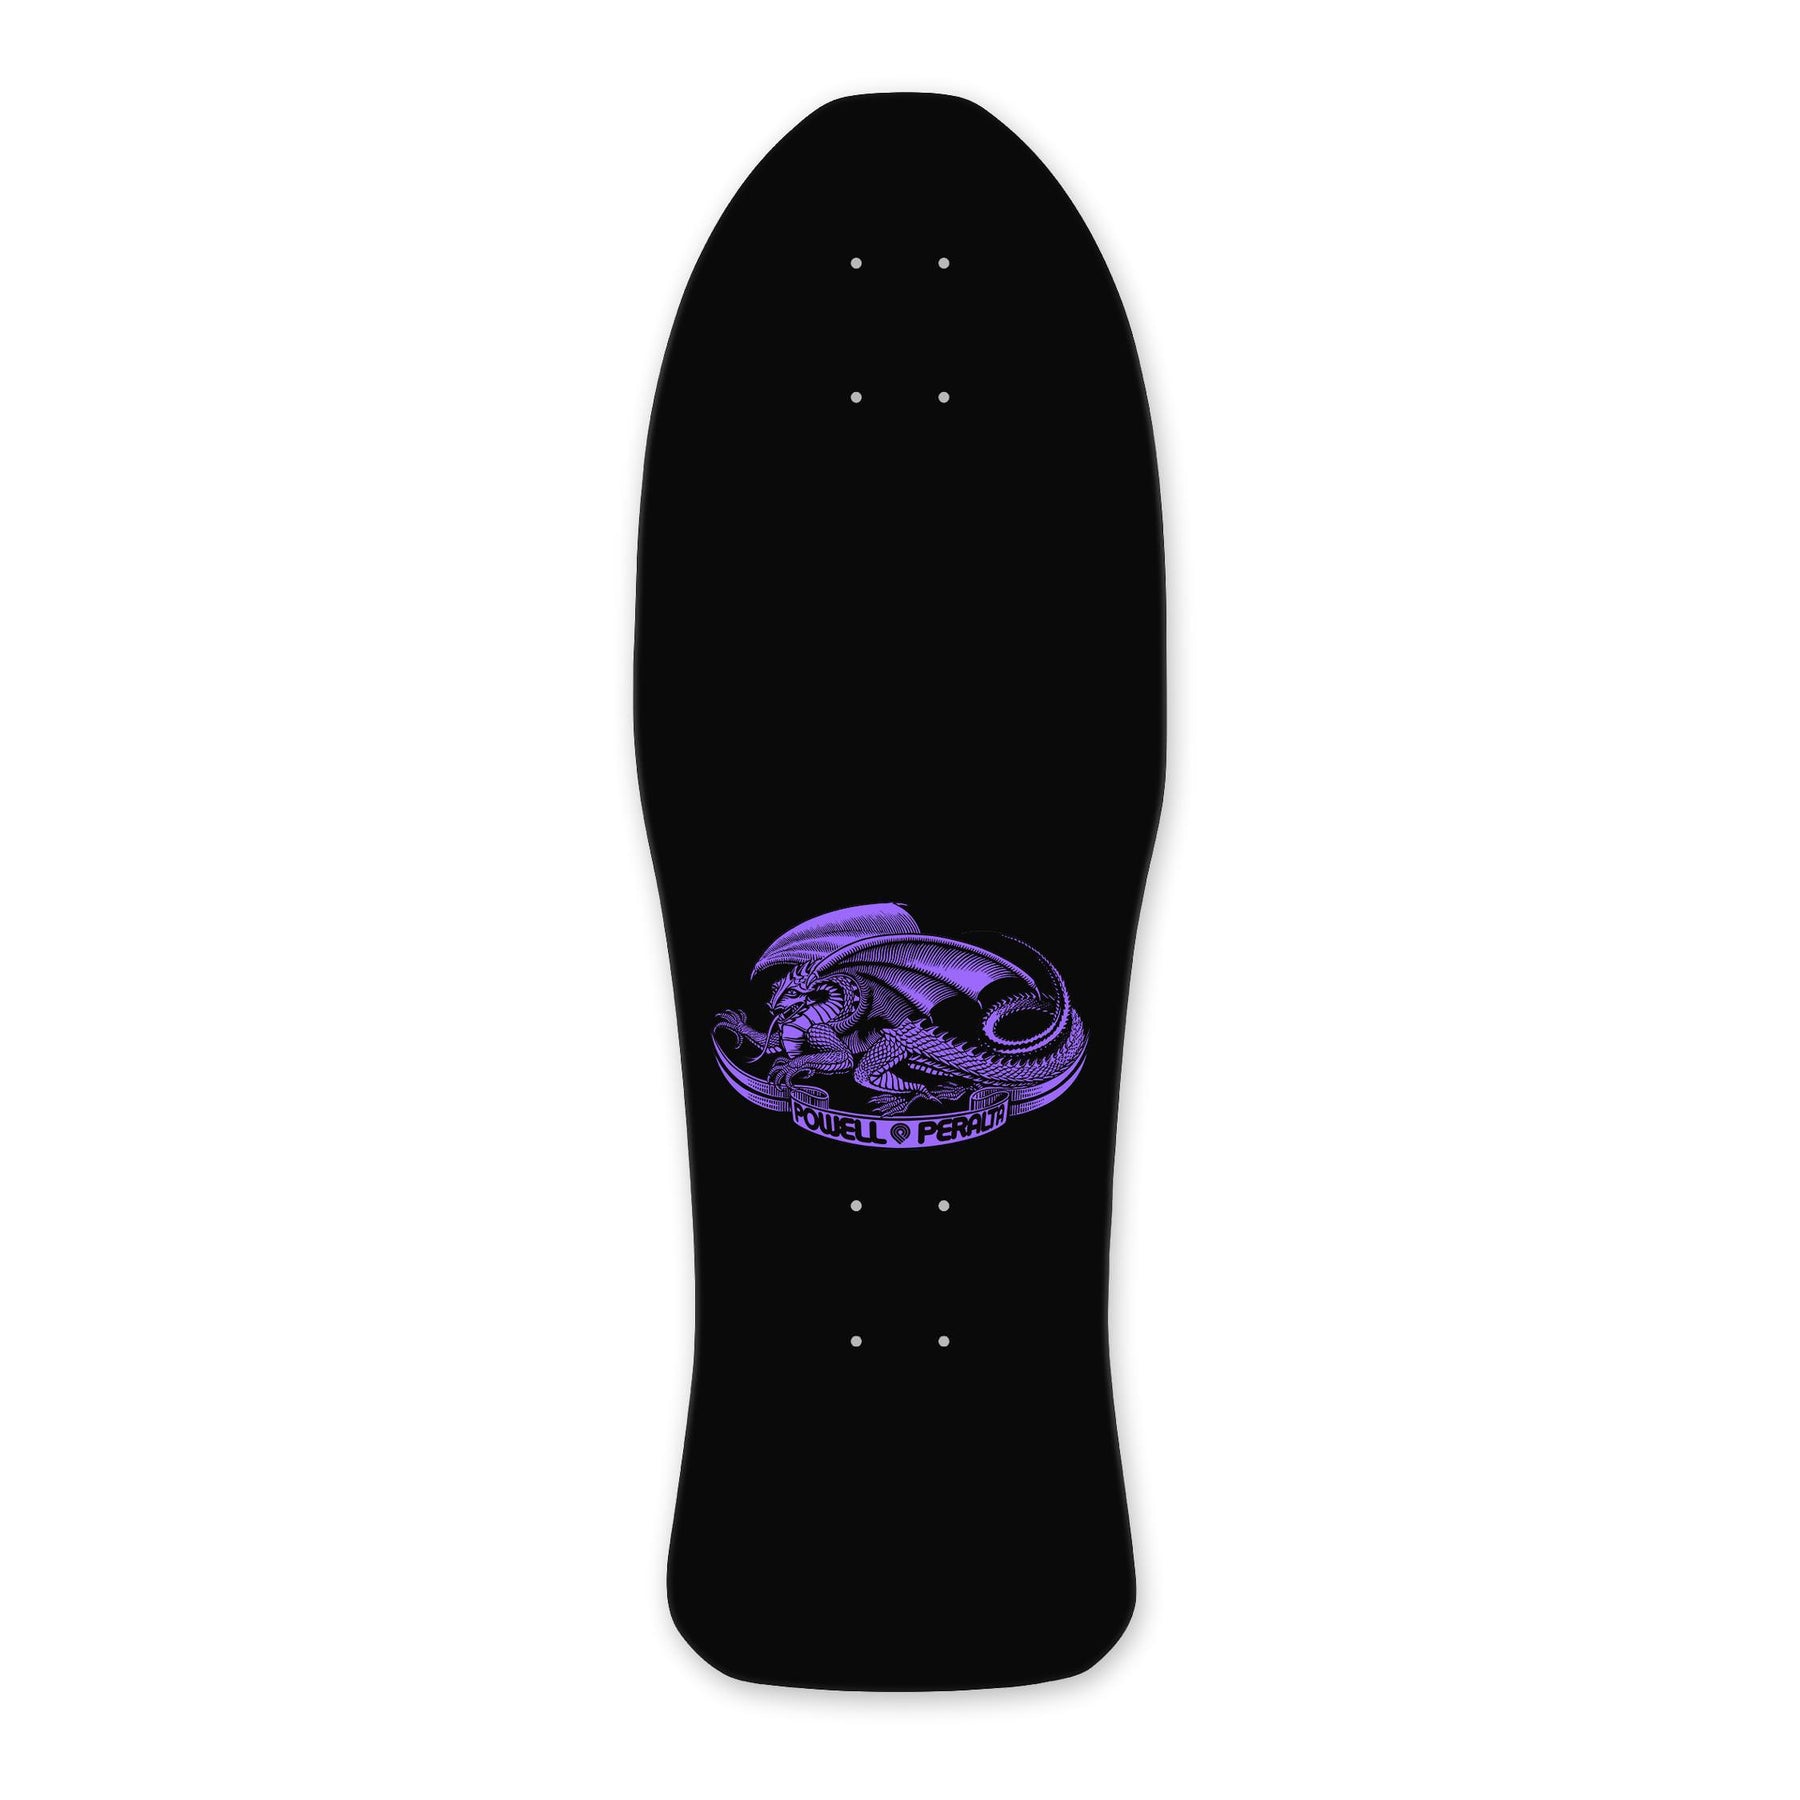 Powell-Peralta Steve Caballero Chinese Dragon Skateboard, Black/Purple, Shape 150, 10.0"